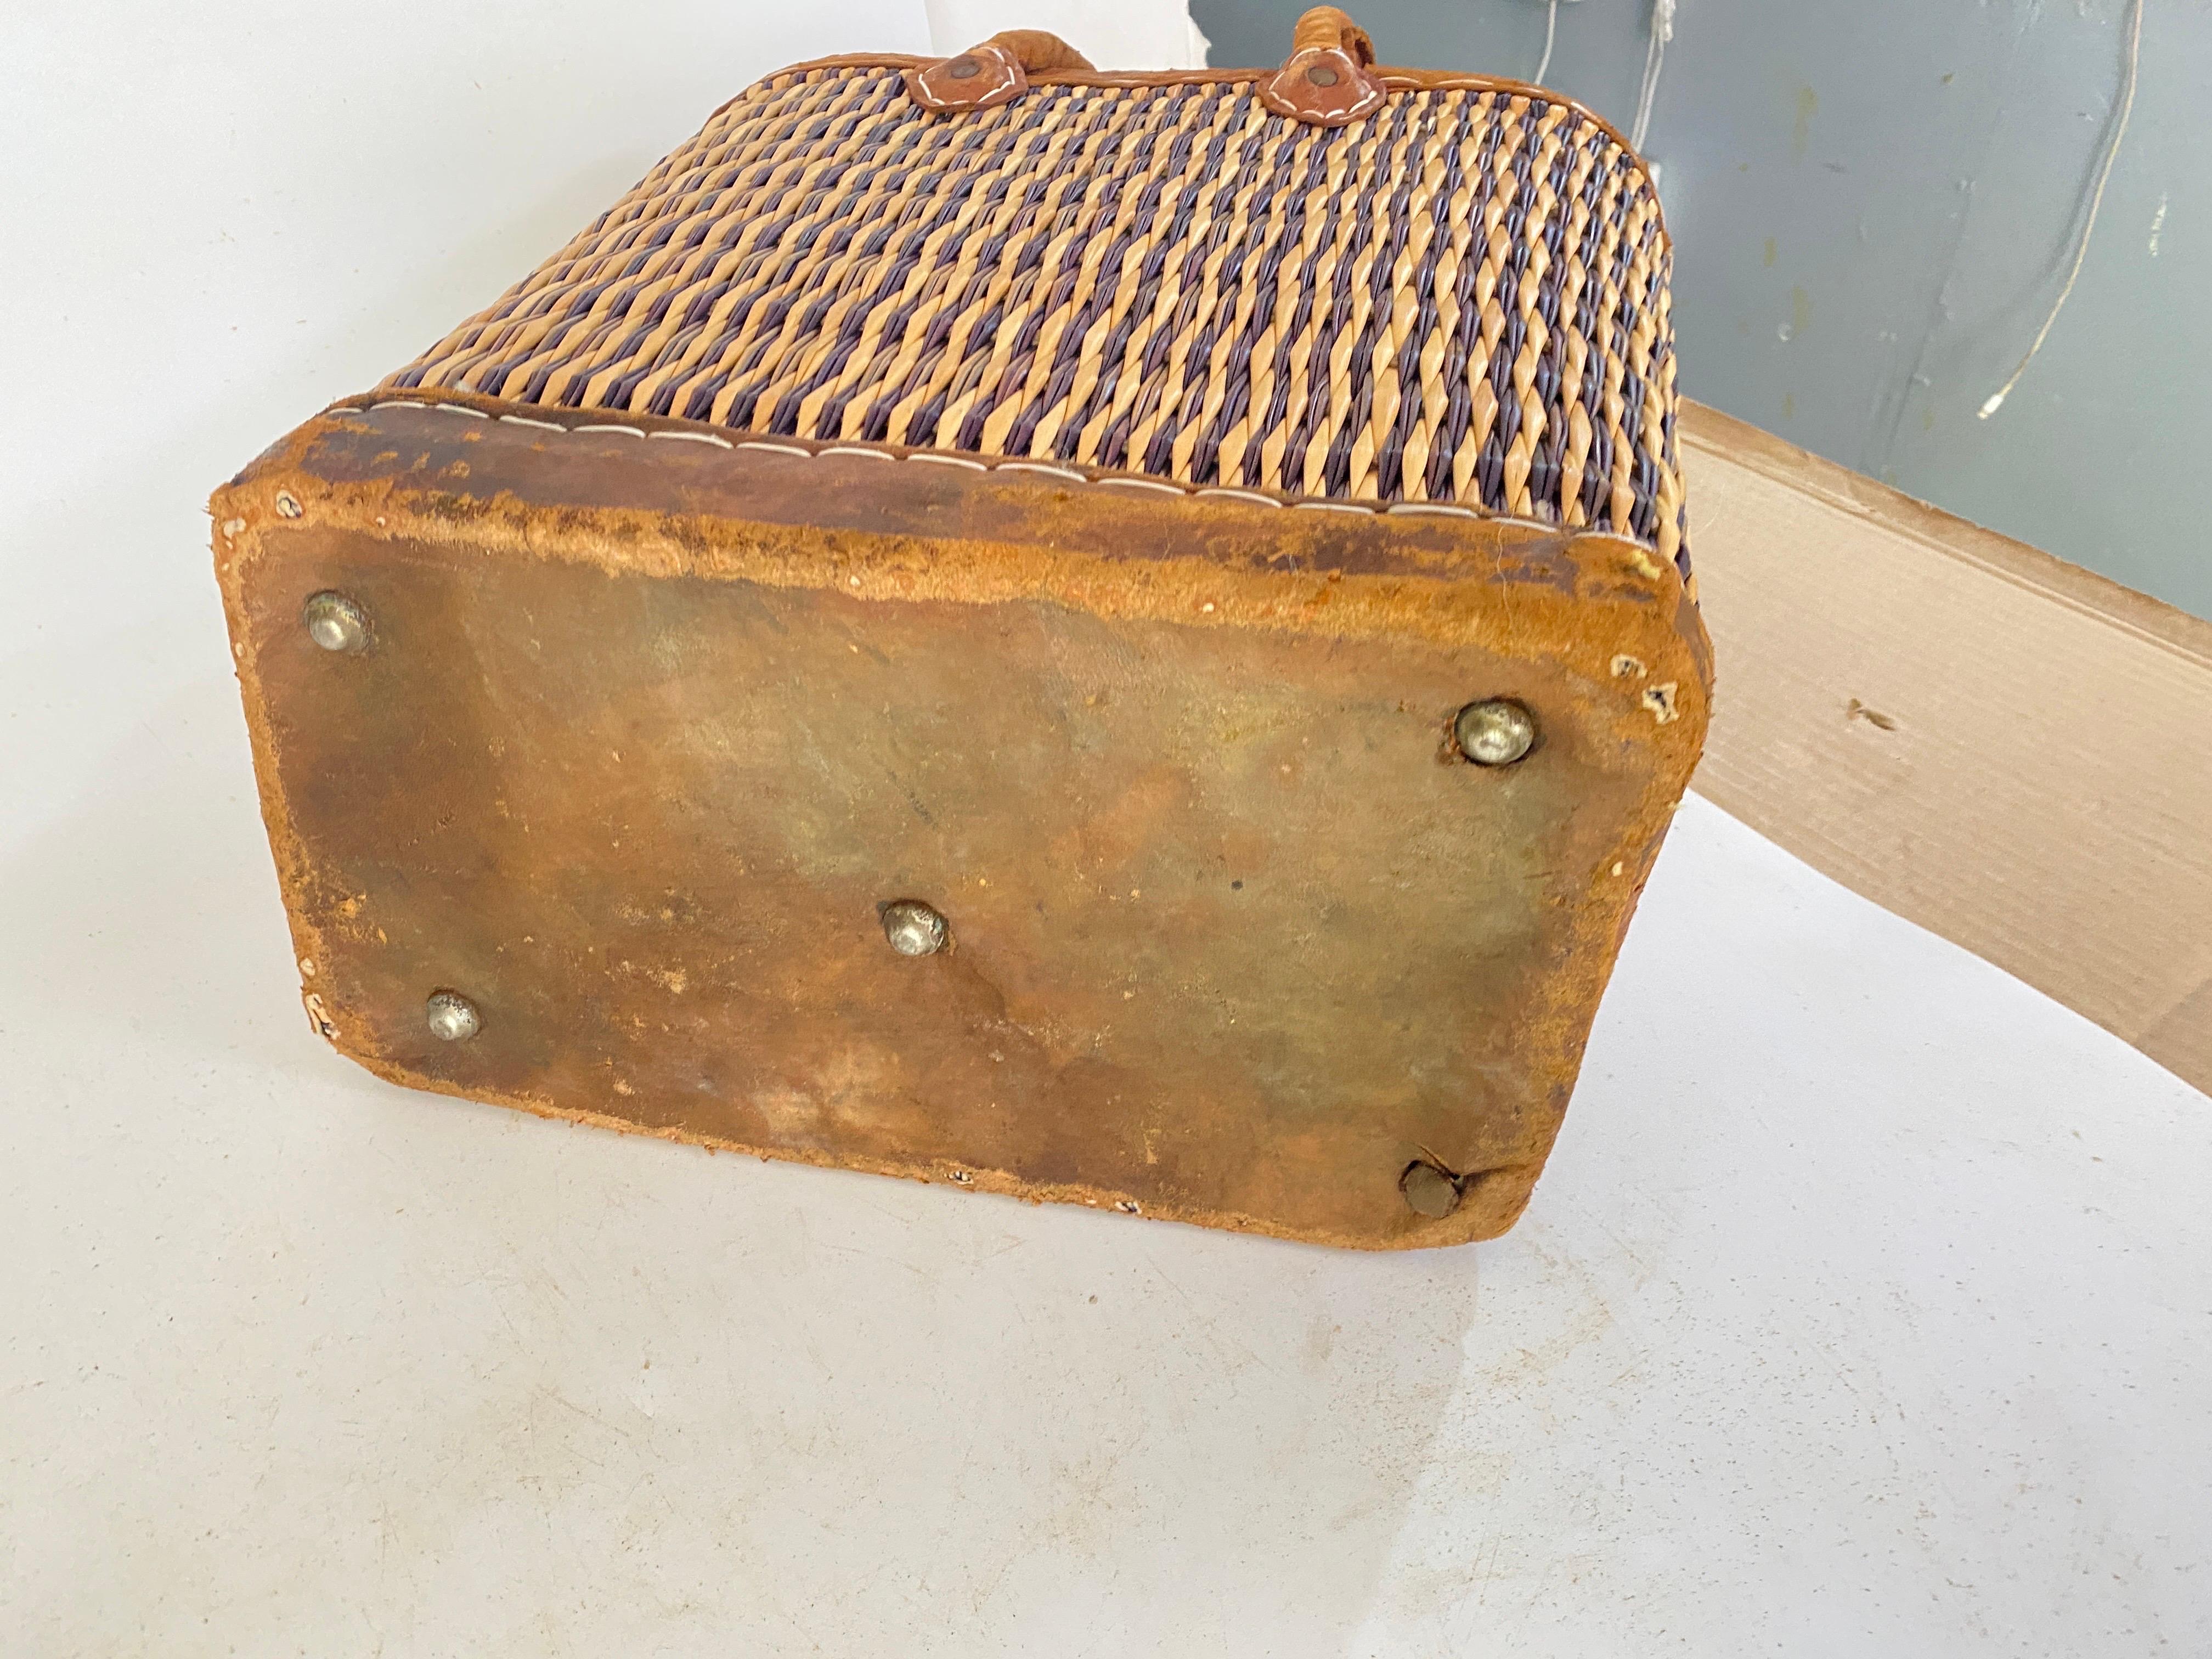 Vintage French Wicker Basket, Gold Color Stitched Leather Bag Handles France For Sale 20